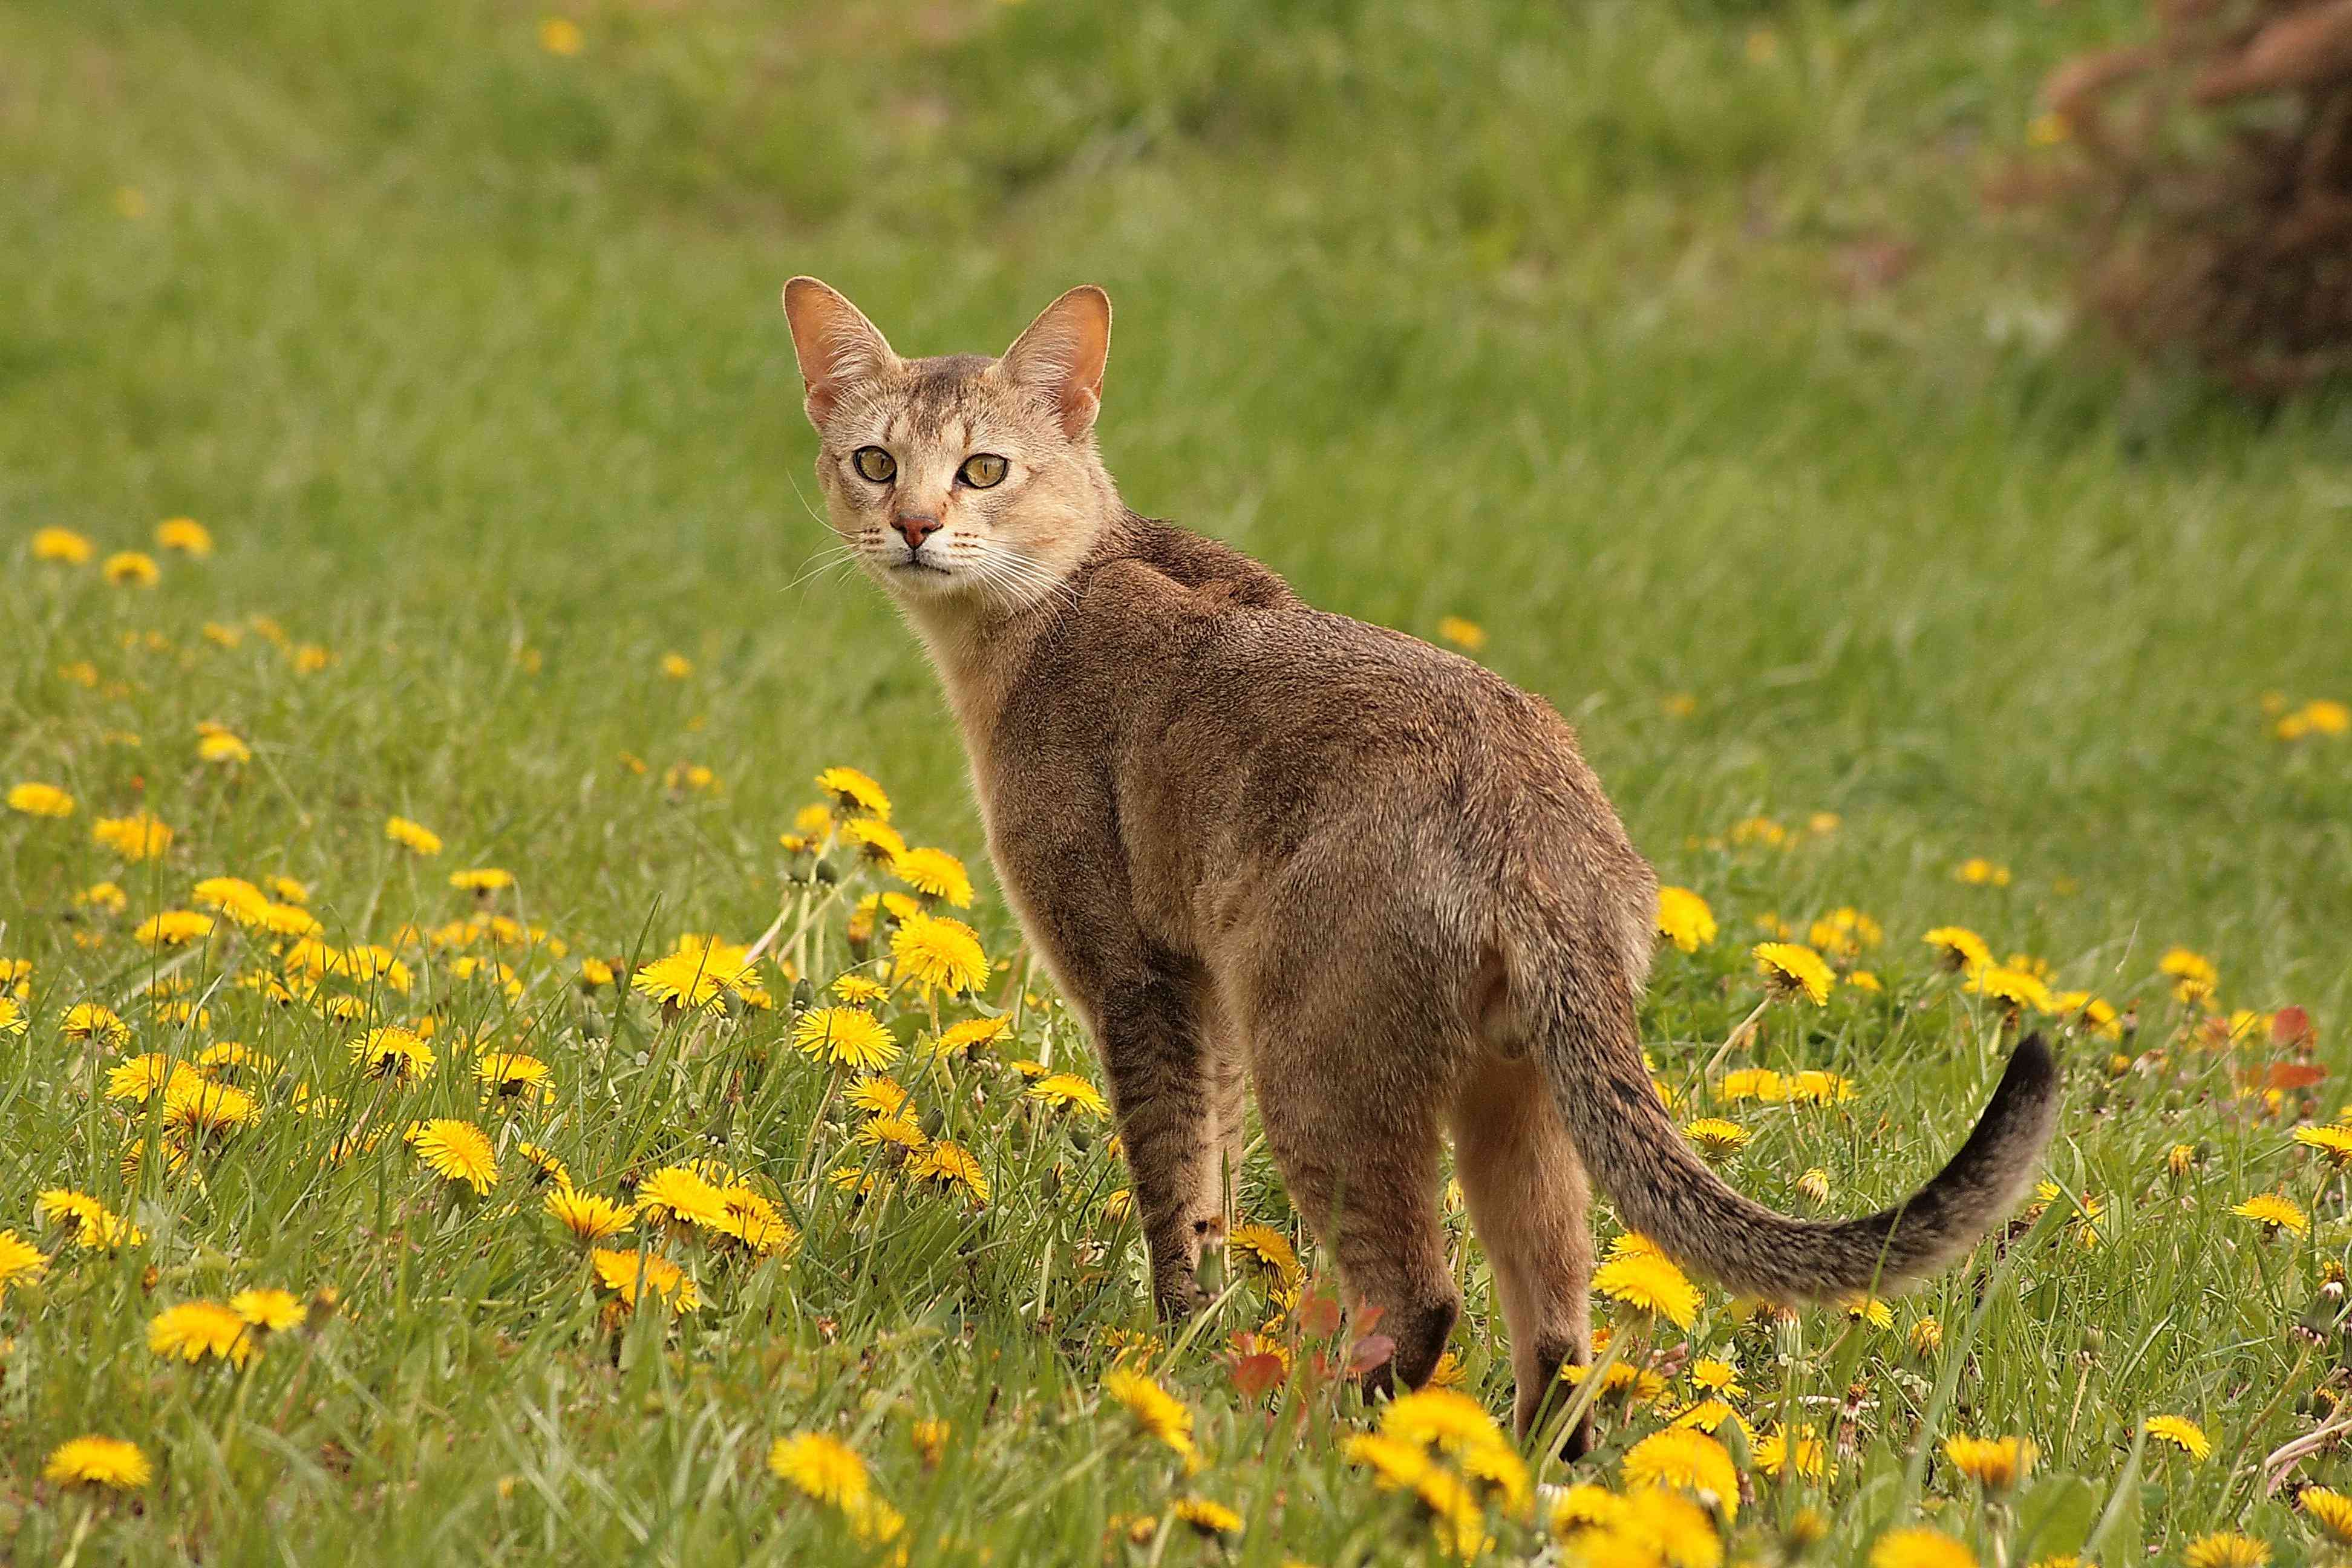 Chausie cat in a field